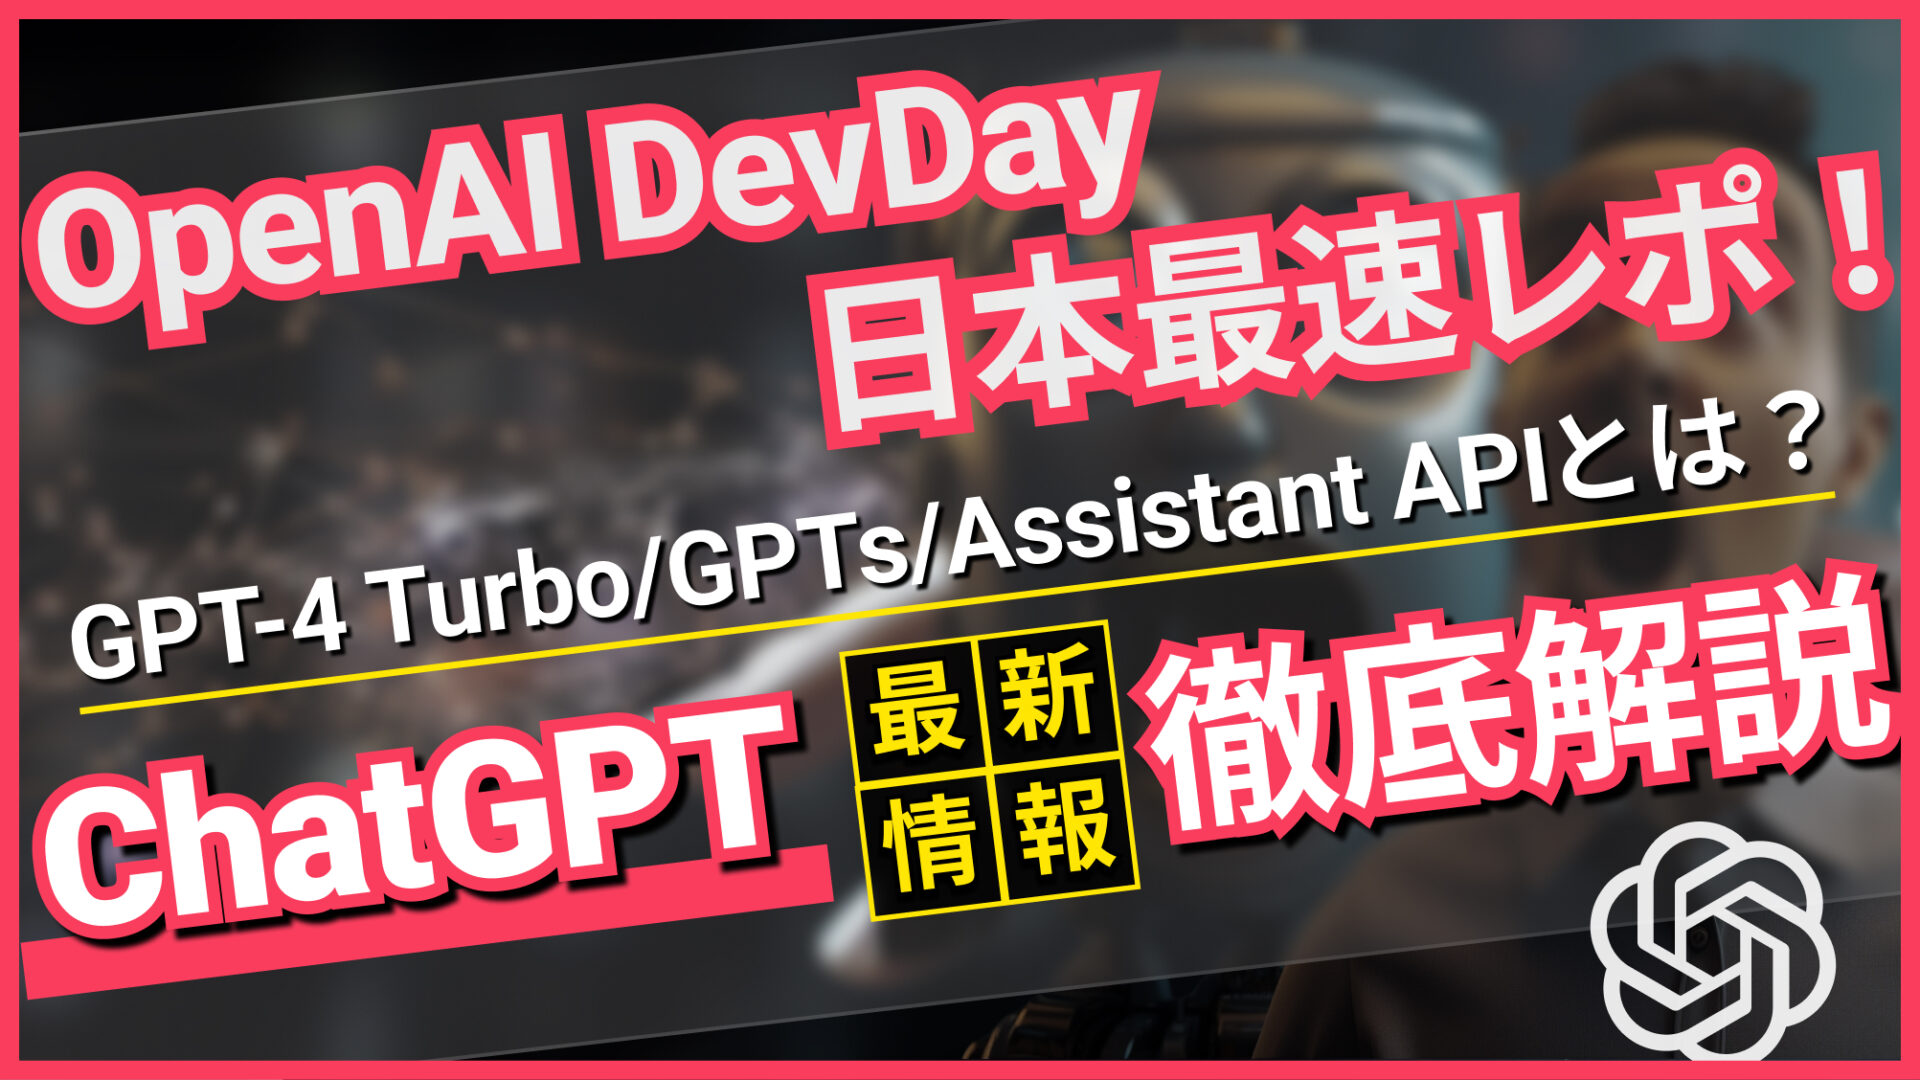 OpenAI-DevDay GPT-4-Turbo GPT Assistant-API ChatGPT